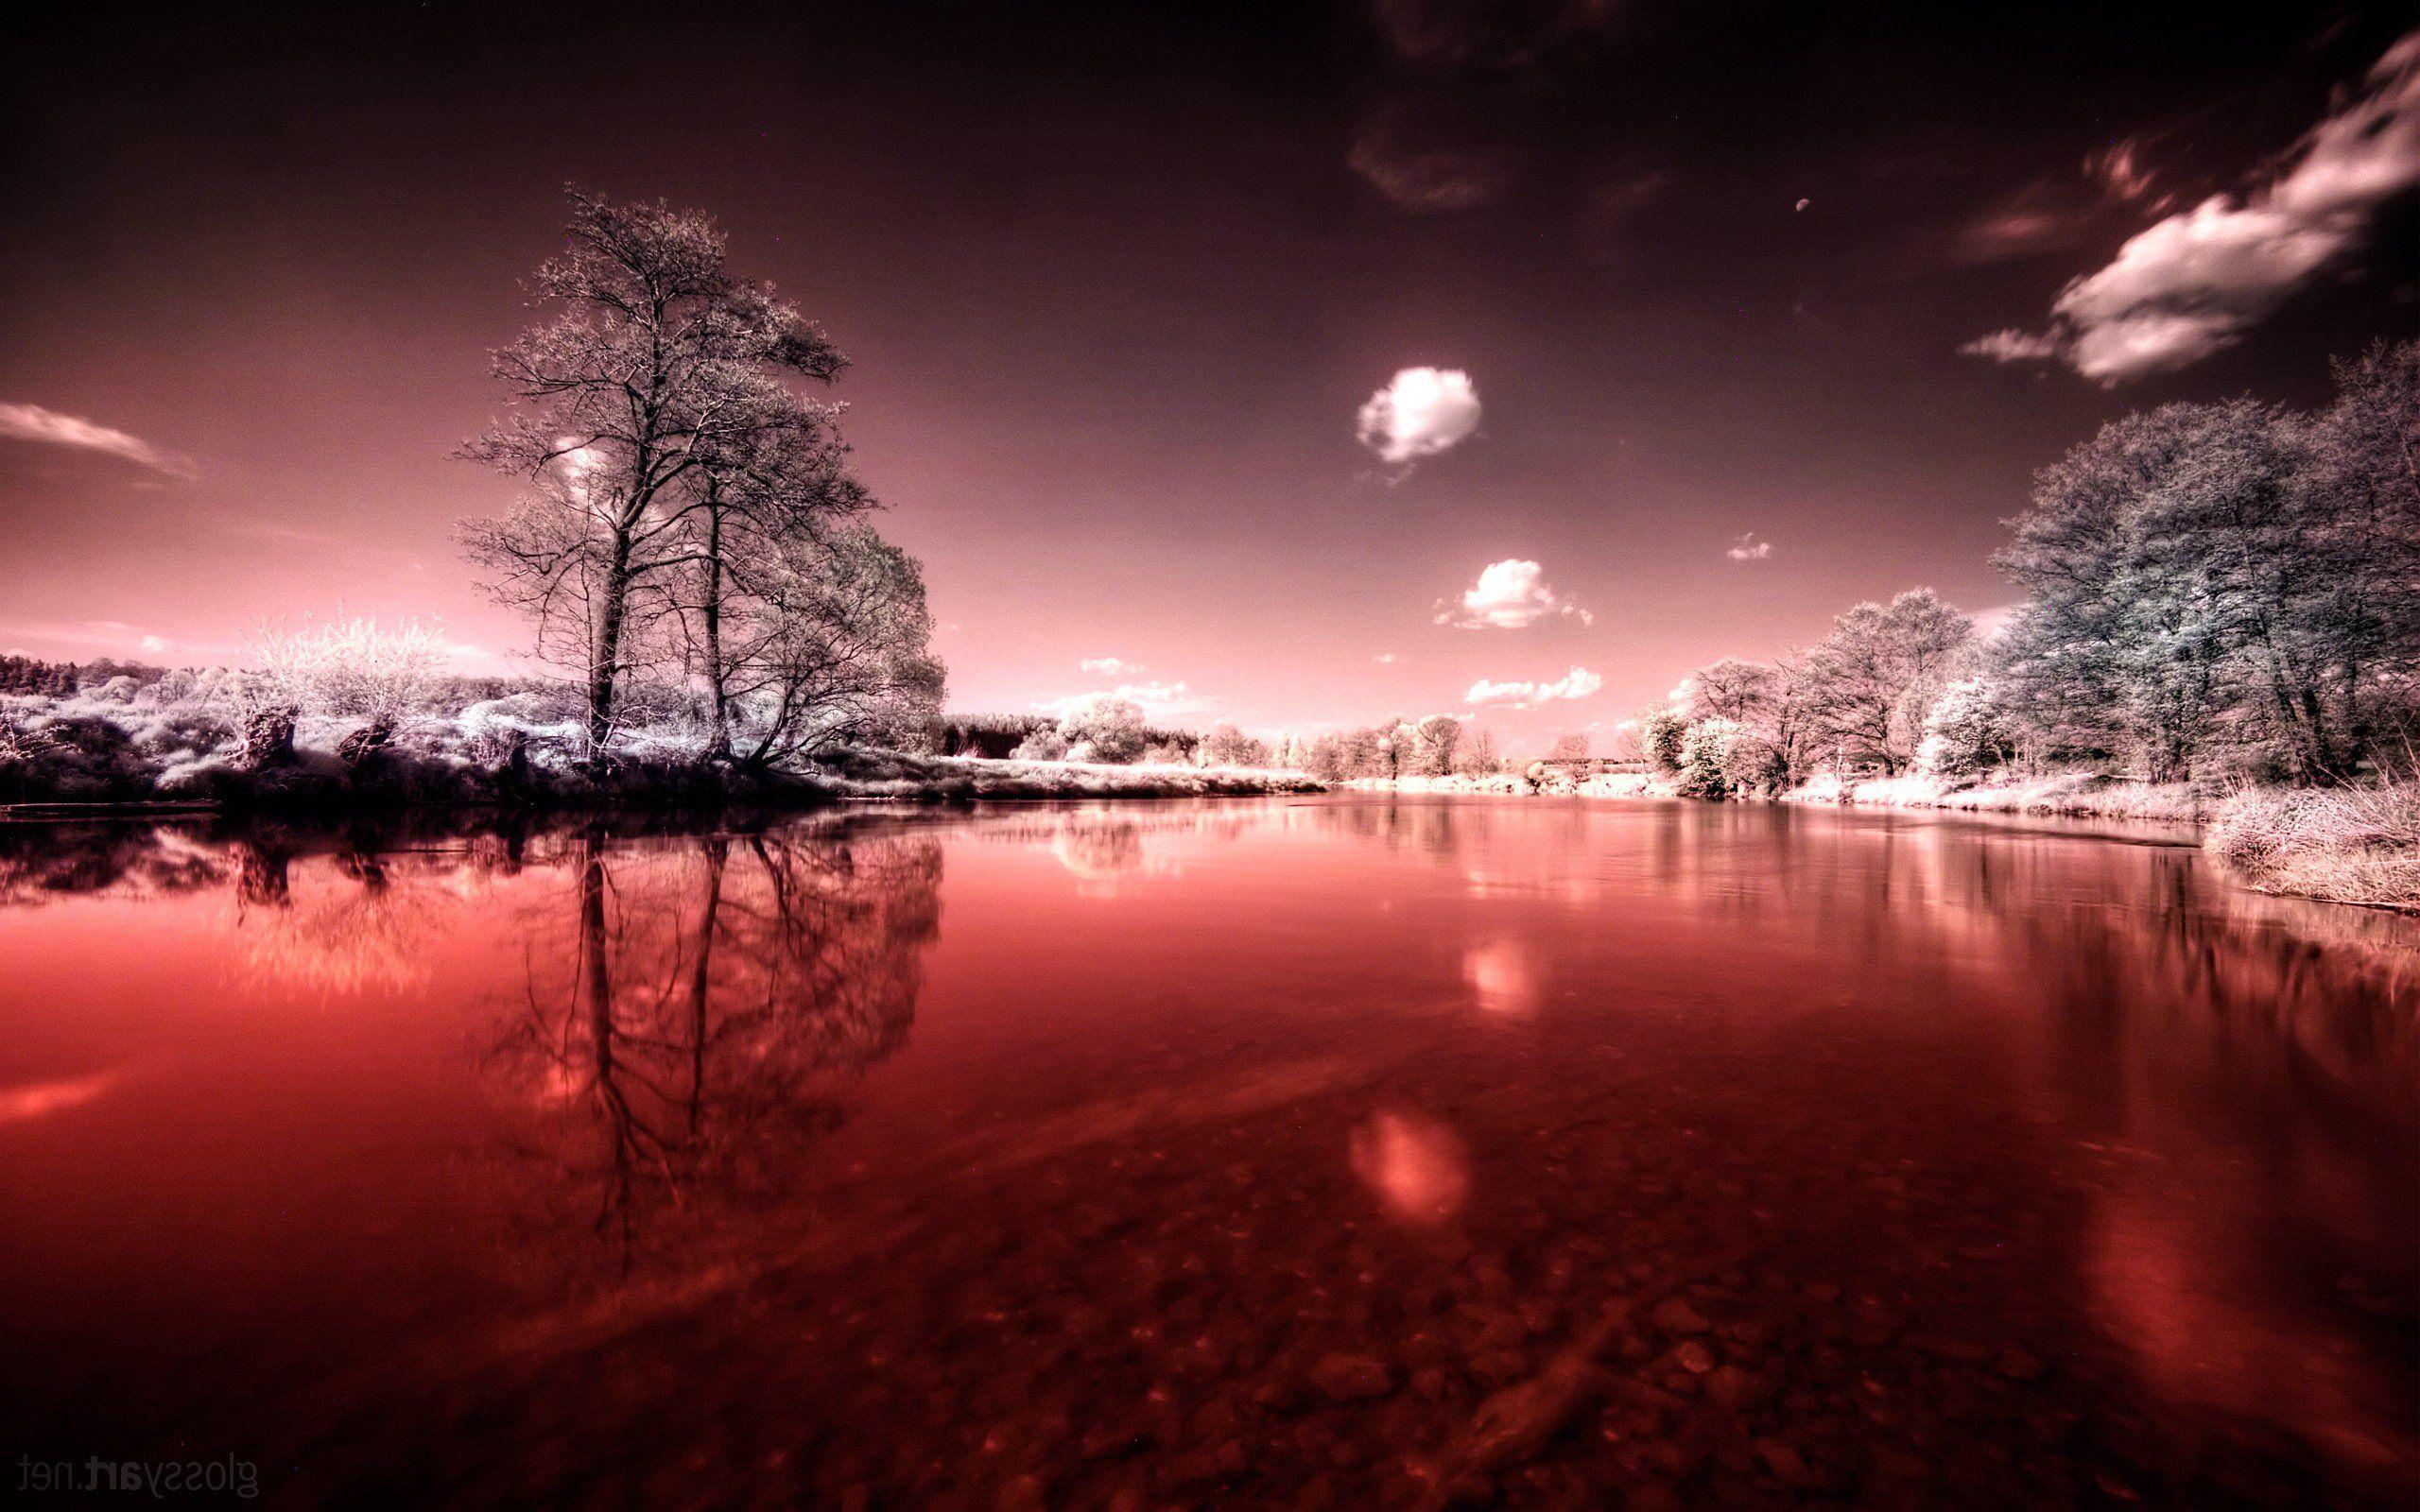 Blood River, HD Nature, 4k Wallpaper, Image, Background, Photo